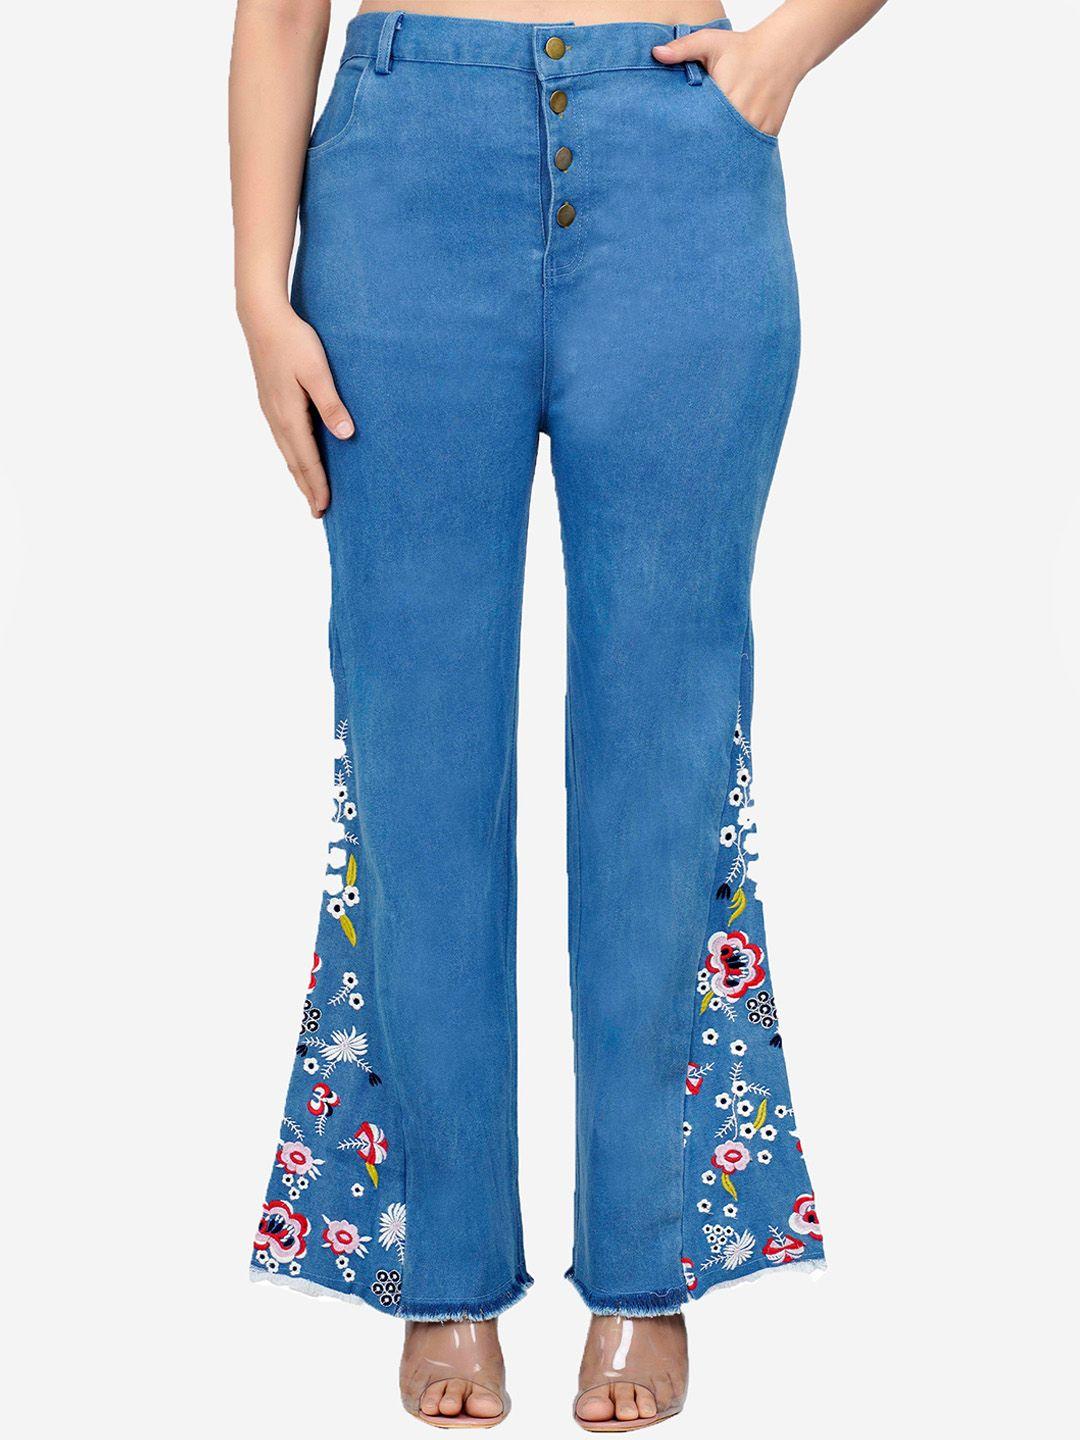 sumavi-fashion women floral embroidered mid-rise denim trousers